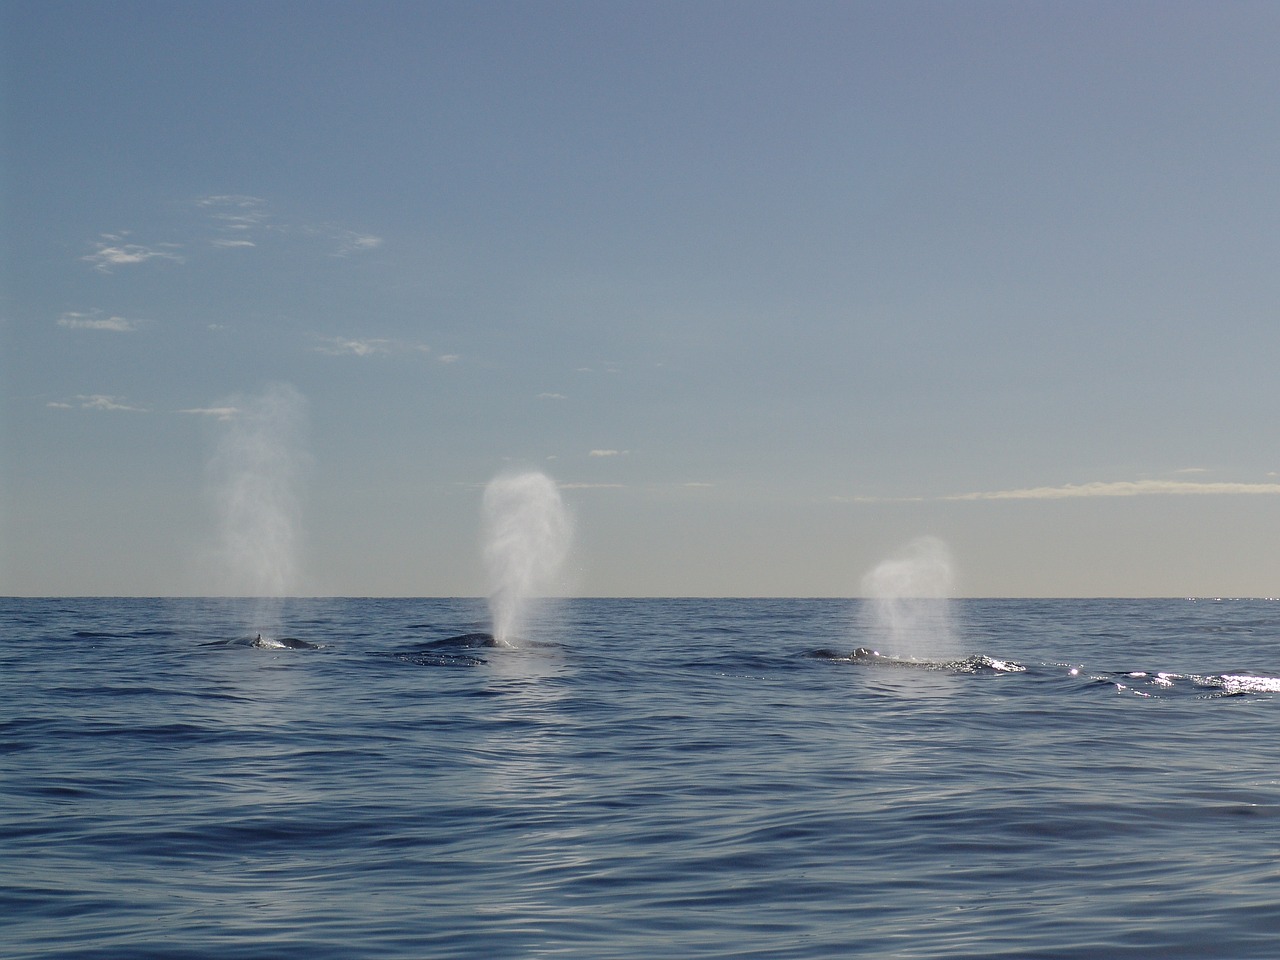 humpback whale walatem the sea with whales free photo